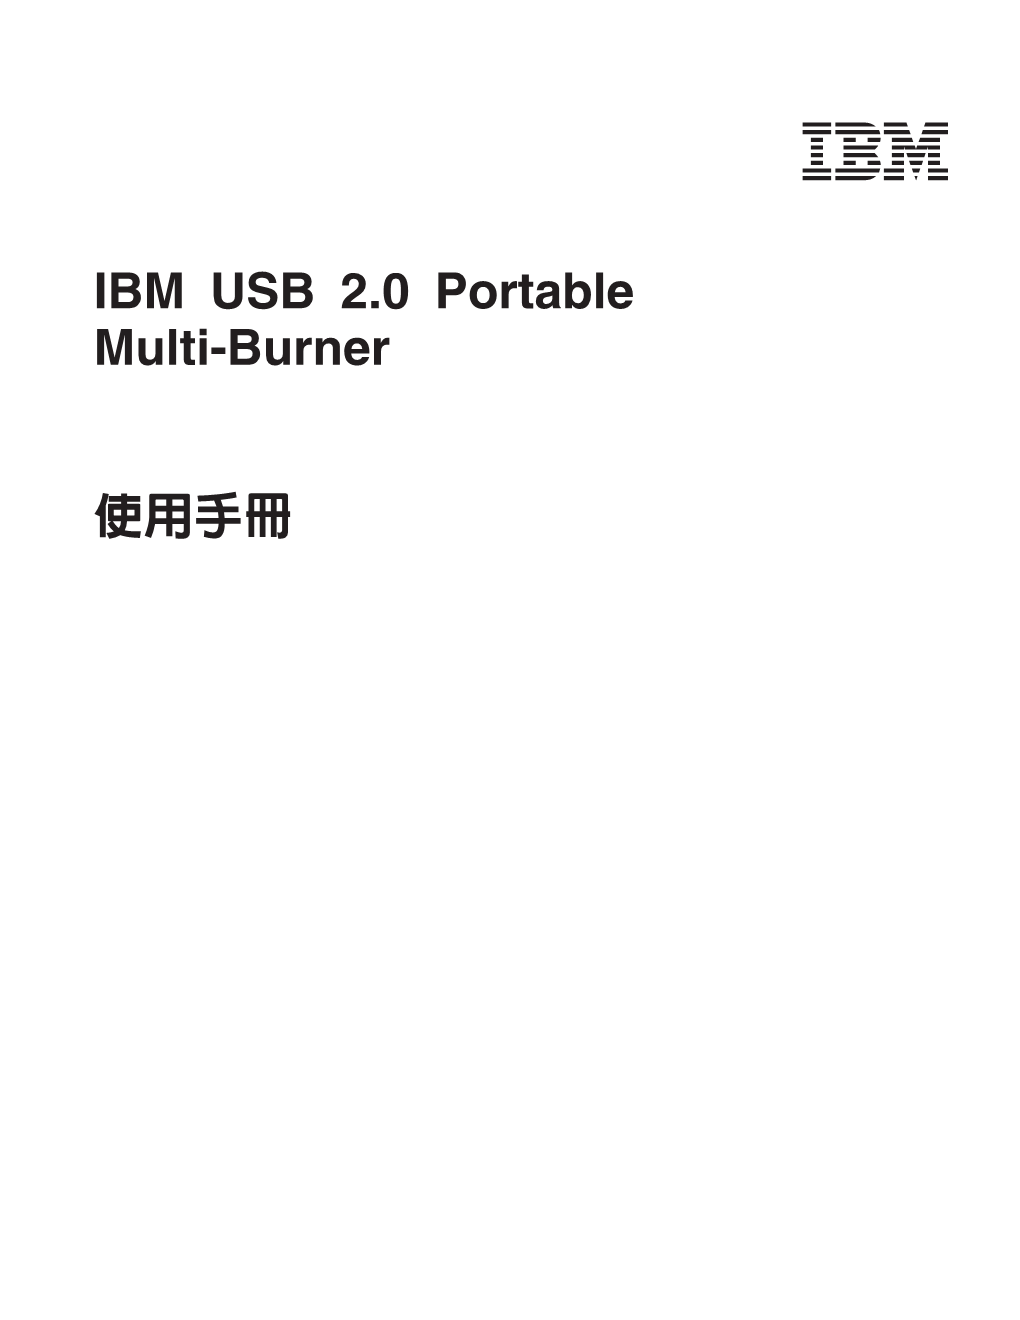 IBM USB 2.0 Portable Multi-Burner